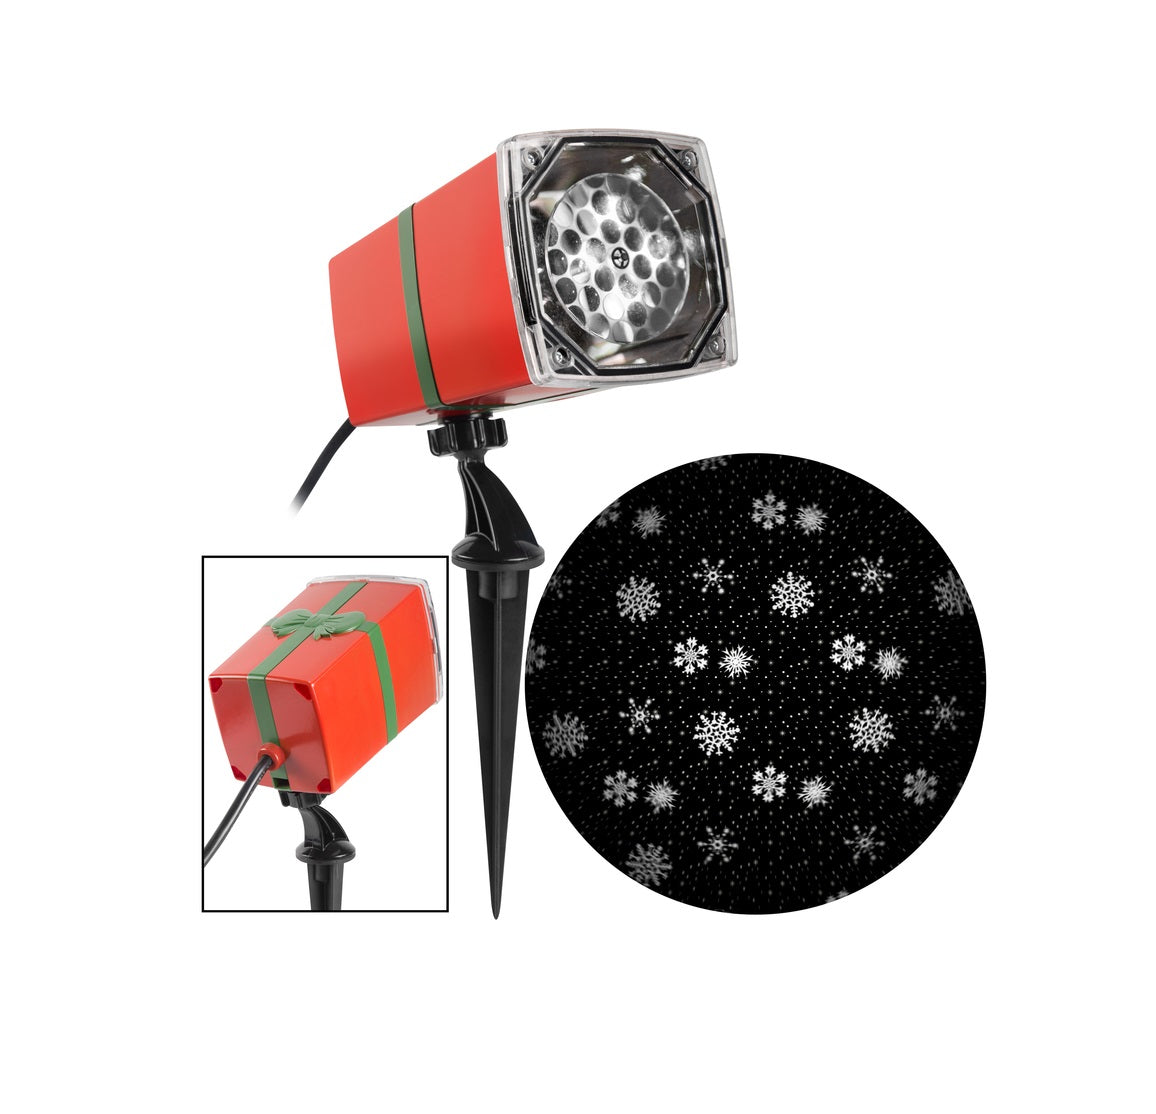 Gemmy 116213 Christmas LED Snow Flakes Light Show Projector